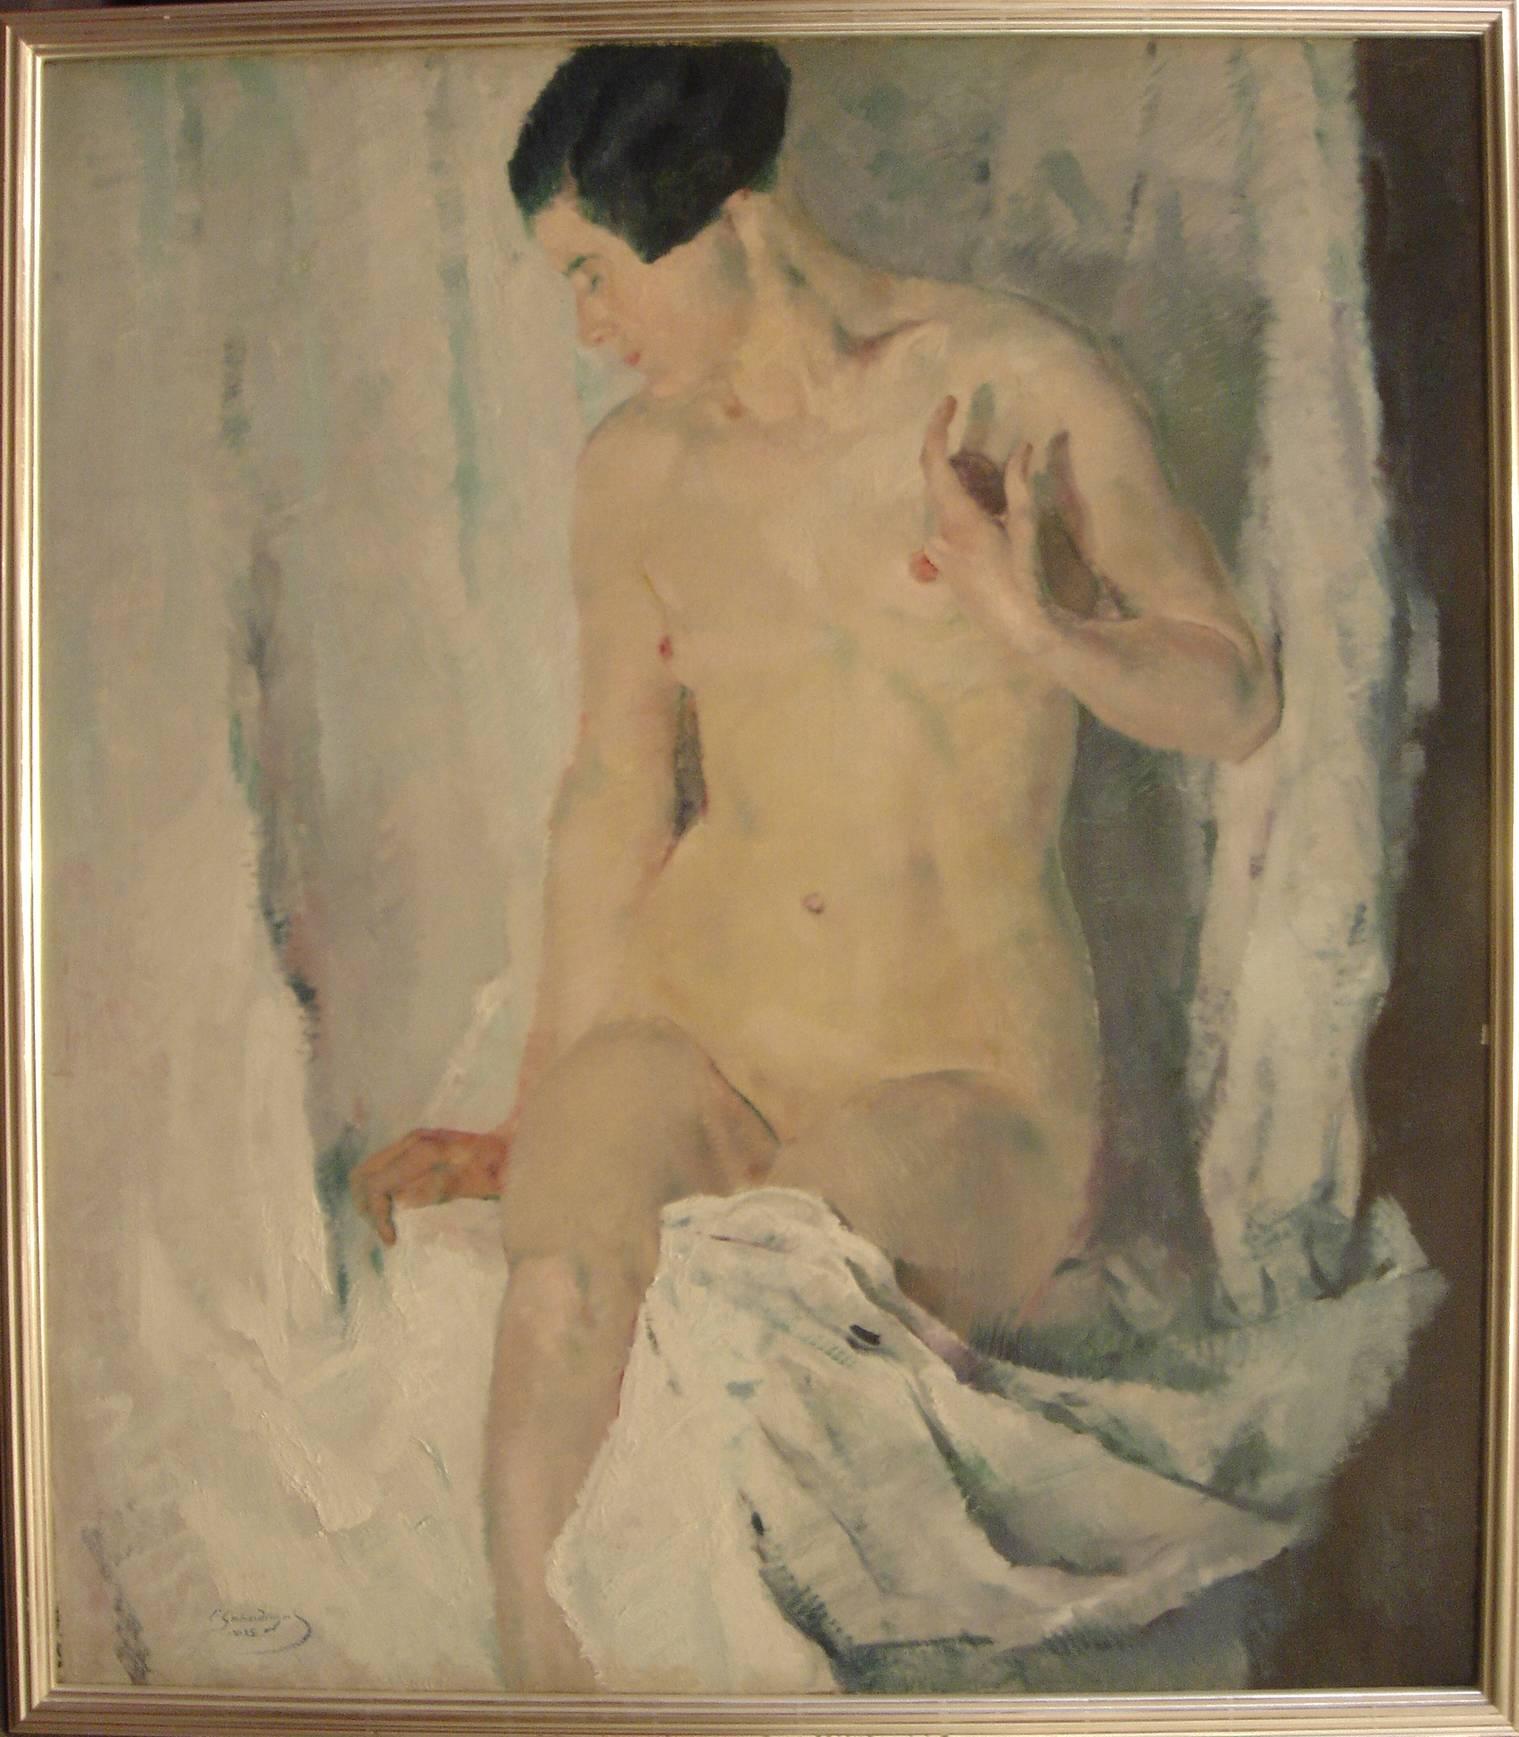 Oil paint on canvas, 1925 by Constantin Gerhardinger, Germany. Signed and dated lower left: . V.25 C Gerhardinger. Framed.
Measurements: 43.5 x 37.99 in ( 110,5 x 96,5 cm )

